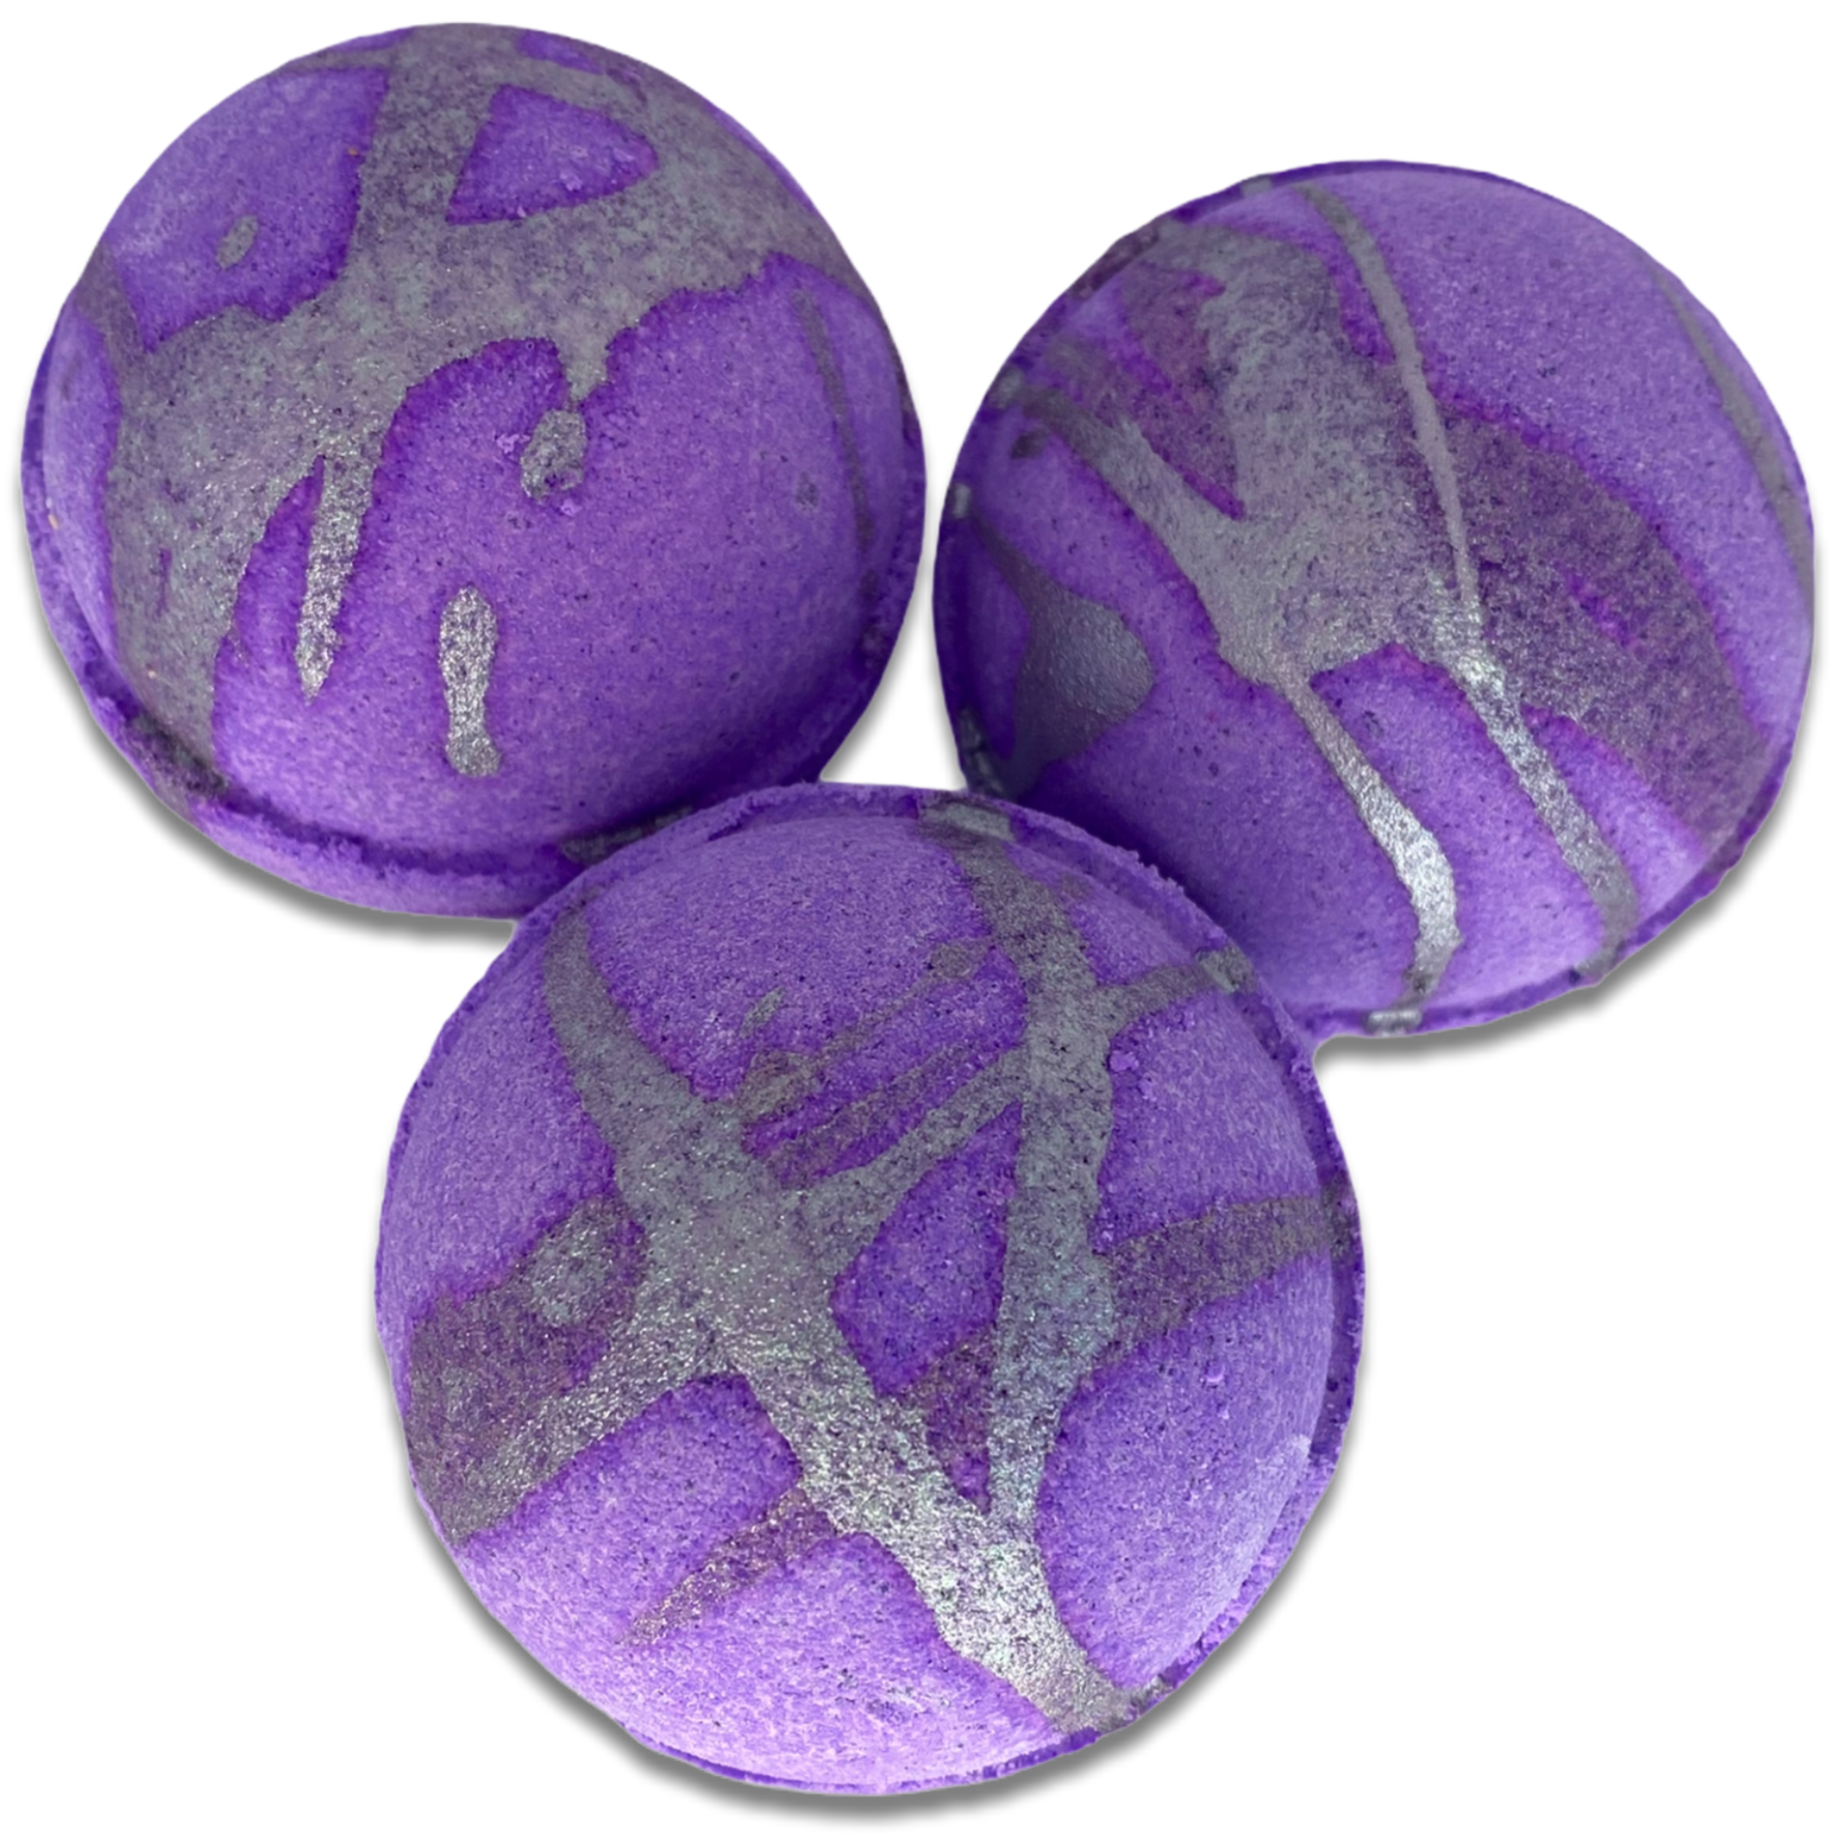 3 purple bath bomb bath bombs with silver decoration